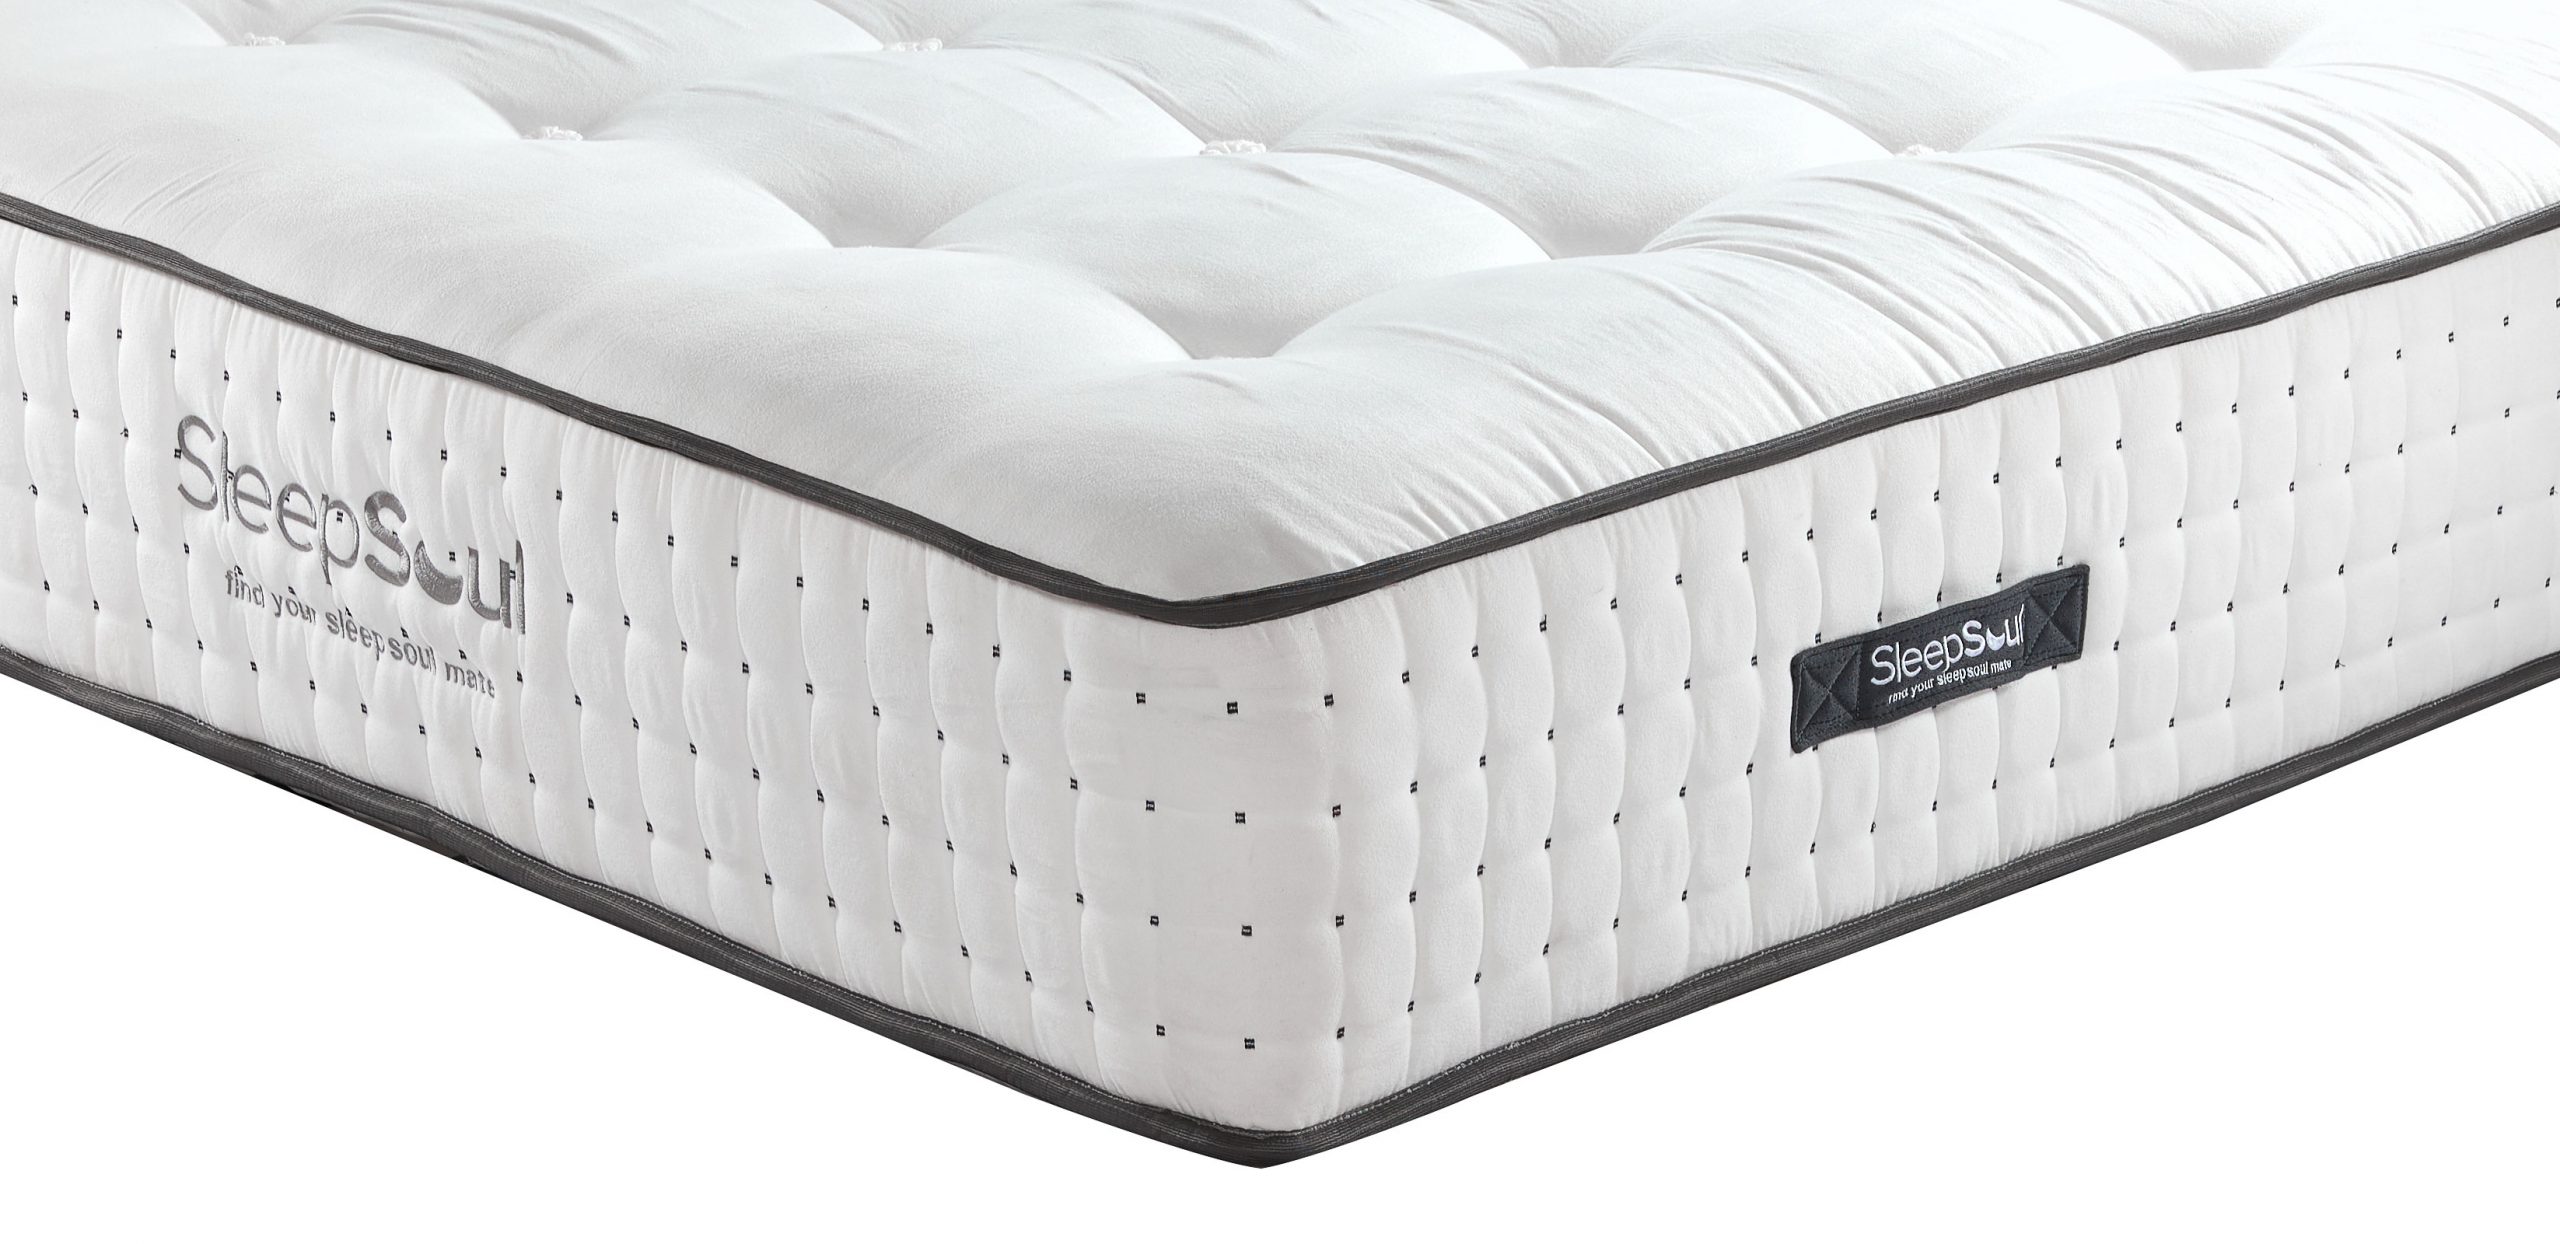 sleep harmony tranquility memory foam mattress